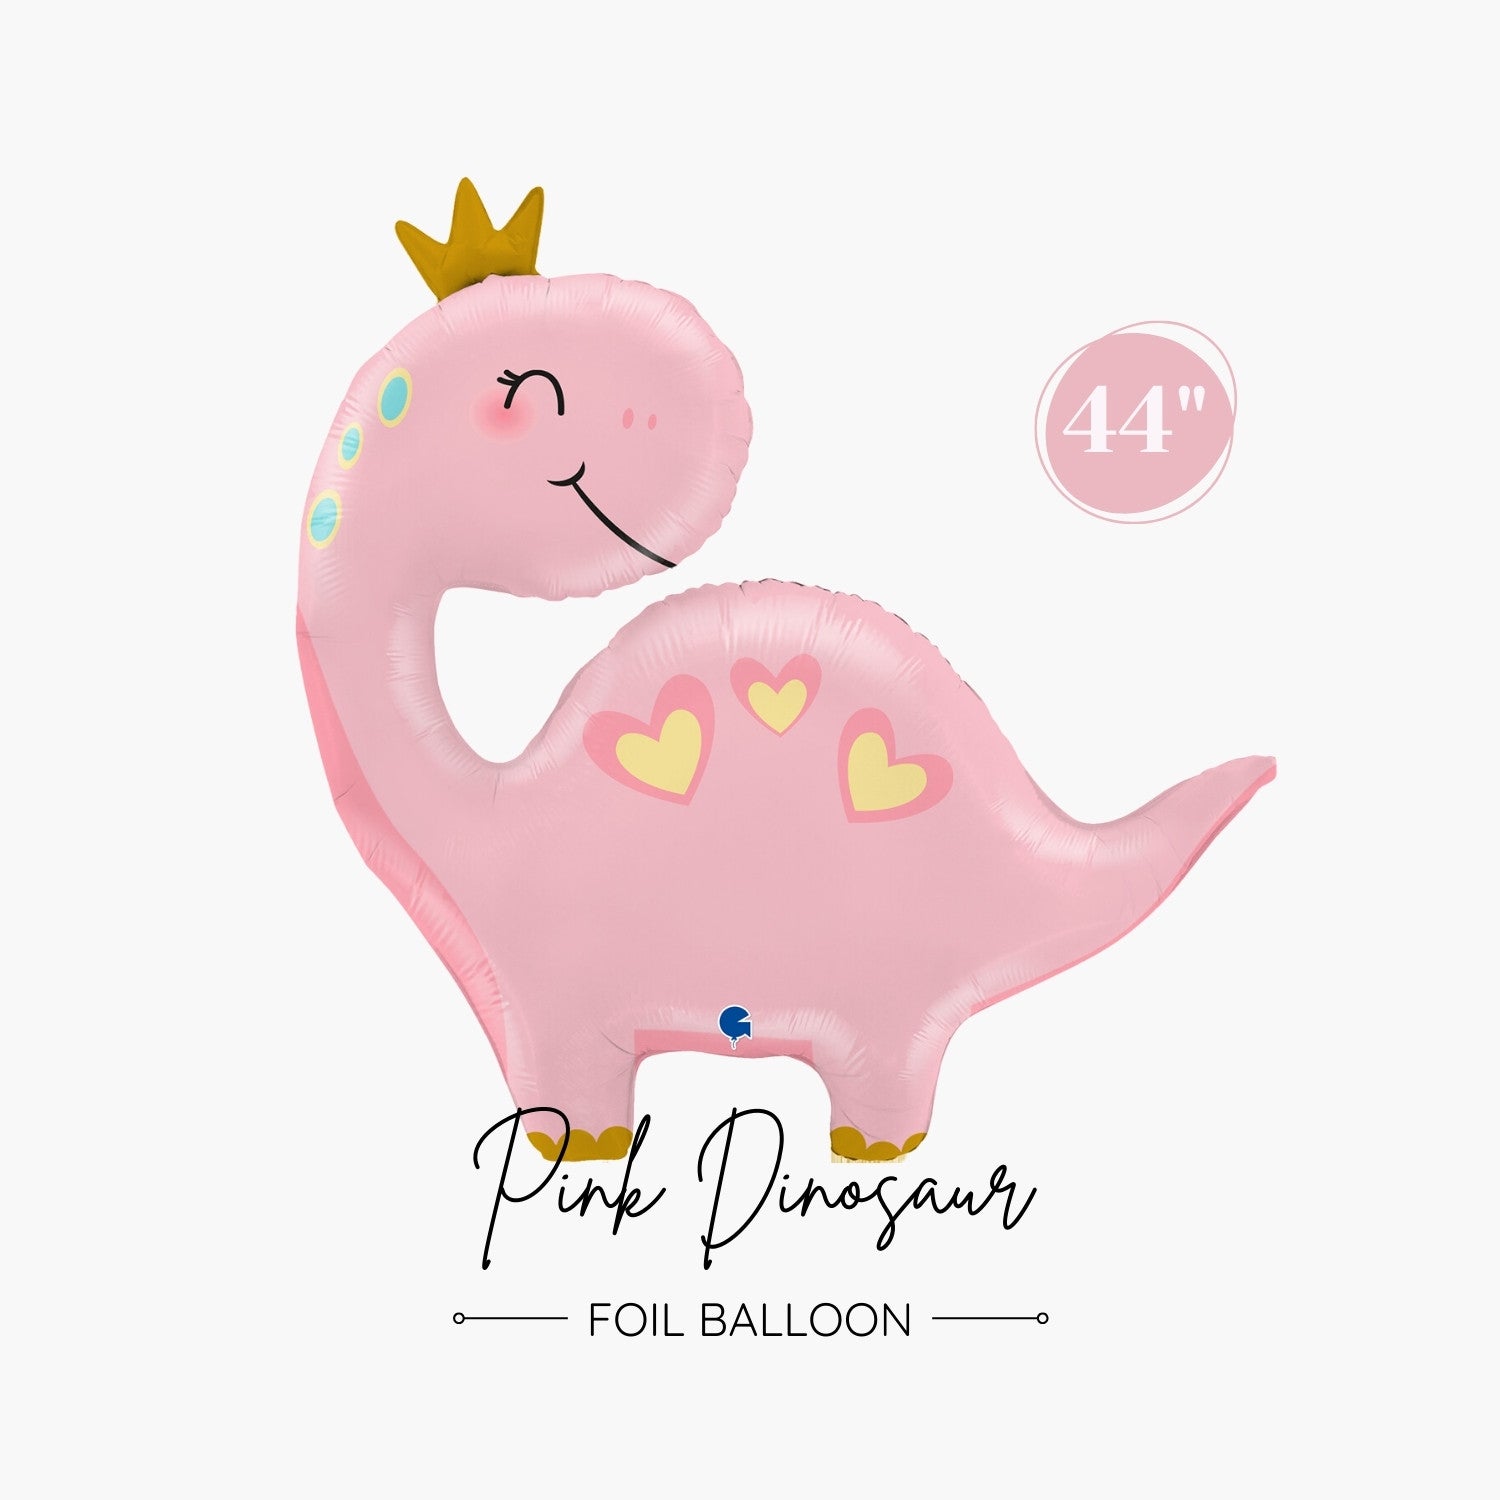 Pink Dinosaur Foil Balloon 44" - Girls Birthday Party Balloon Decorations